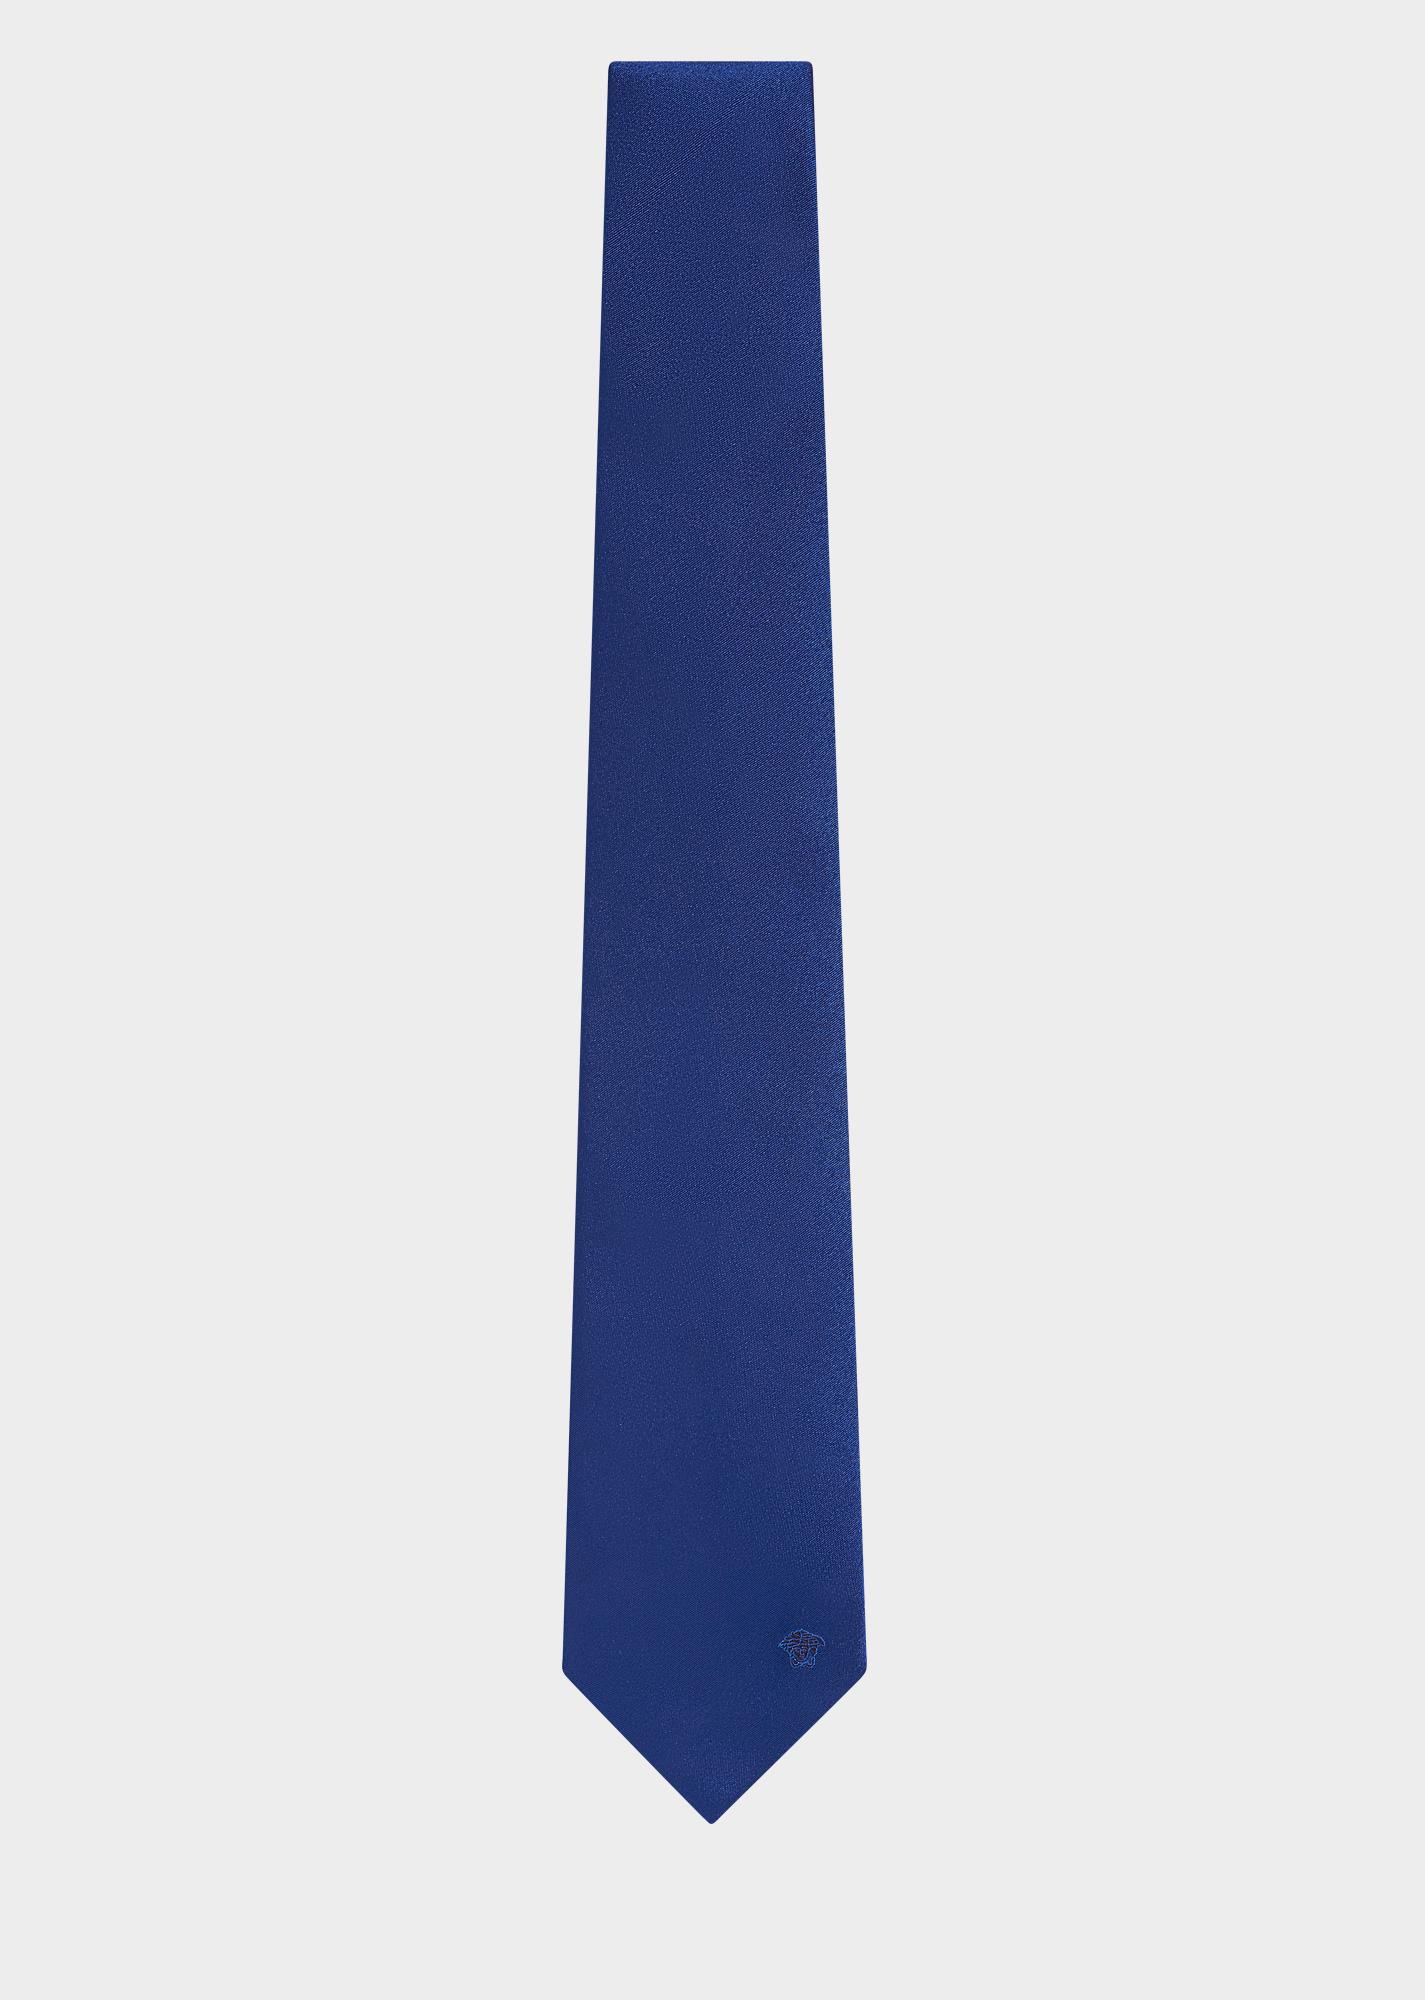 Blue Ties PNG Transparent Blue Ties.PNG Images. | PlusPNG